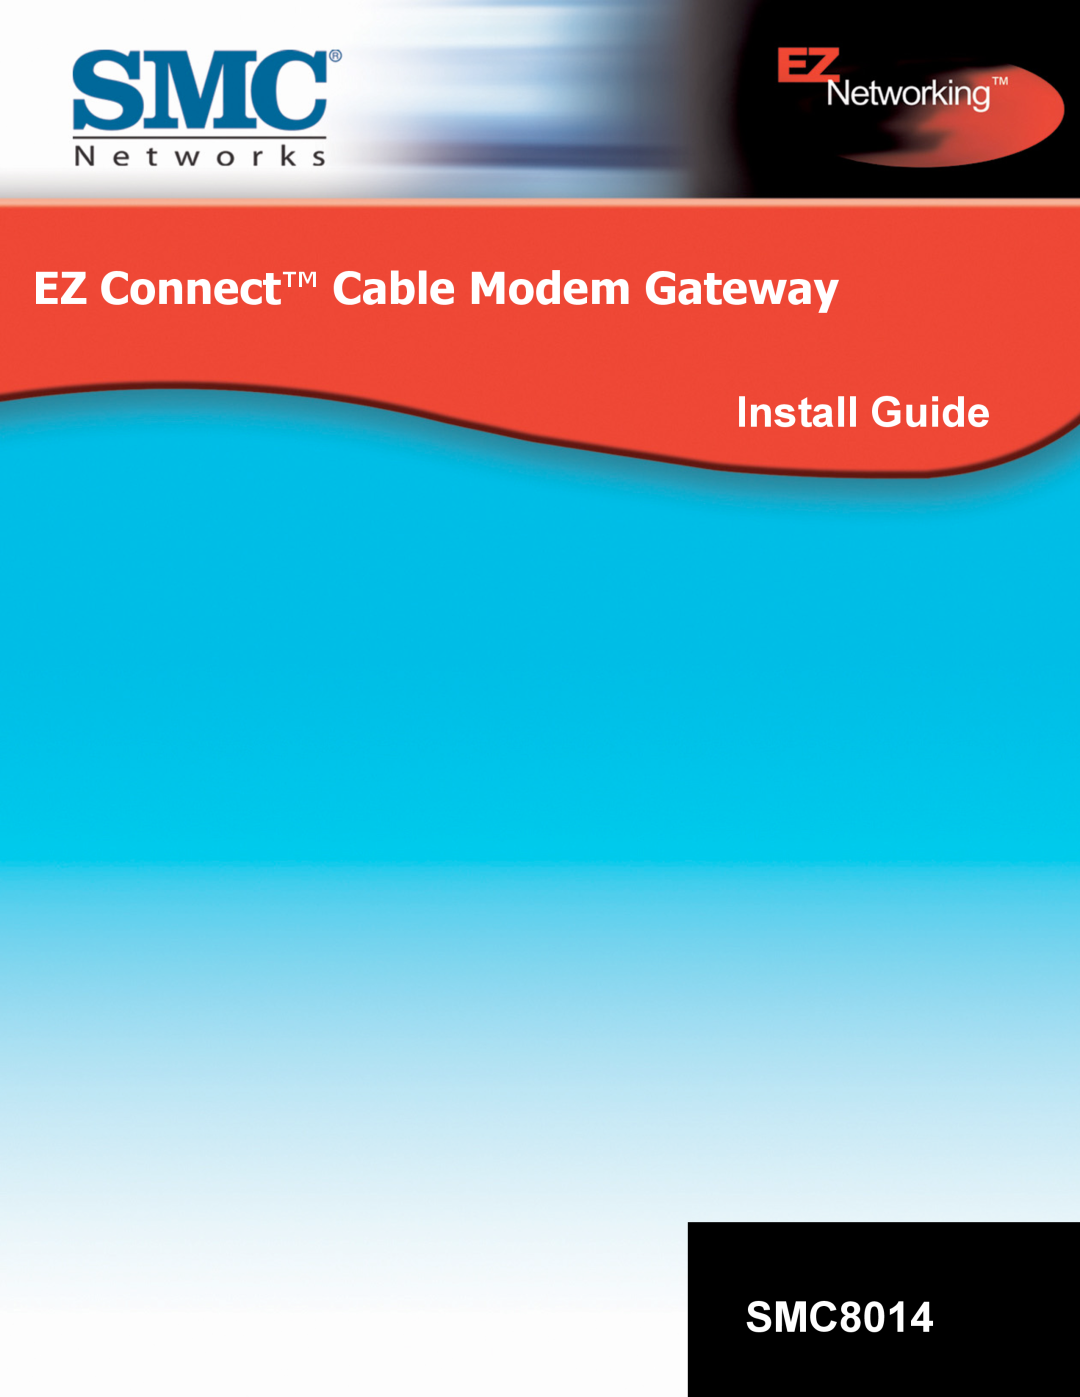 SMC Networks SMC8014 manual Install Guide, EZ Connect Cable Modem Gateway 